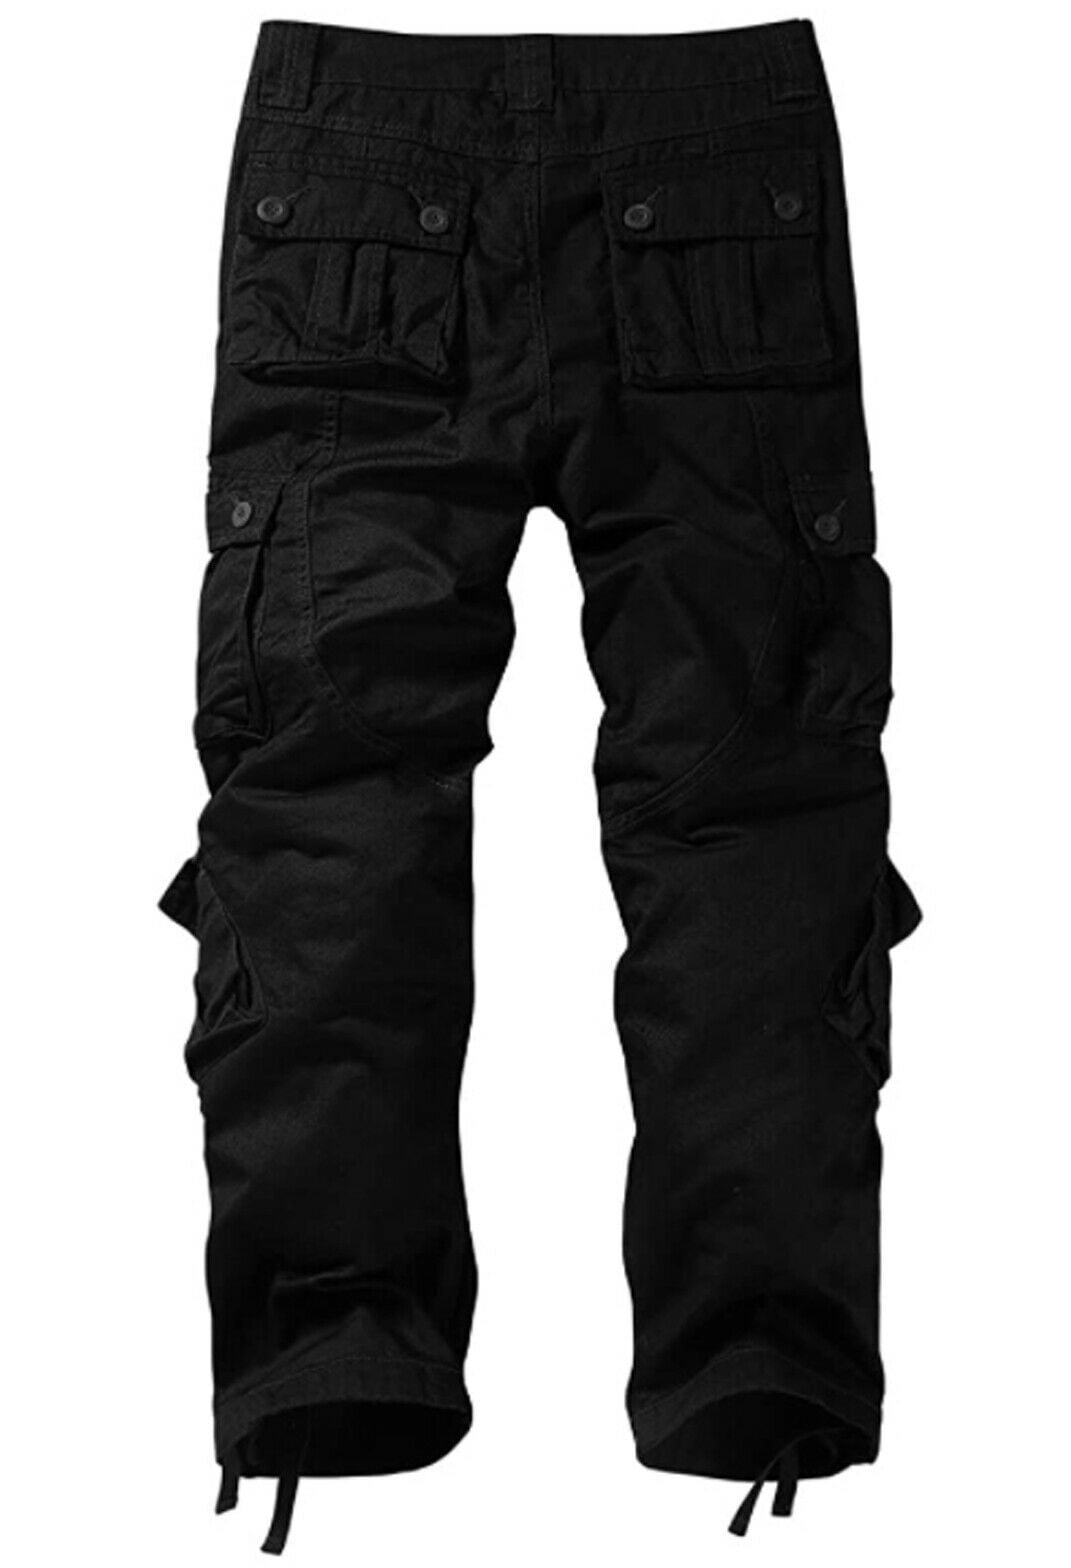 Buy SKYLINEWEARS Men’s Tactical Pants Combat Cargo Trousers Hiking ...